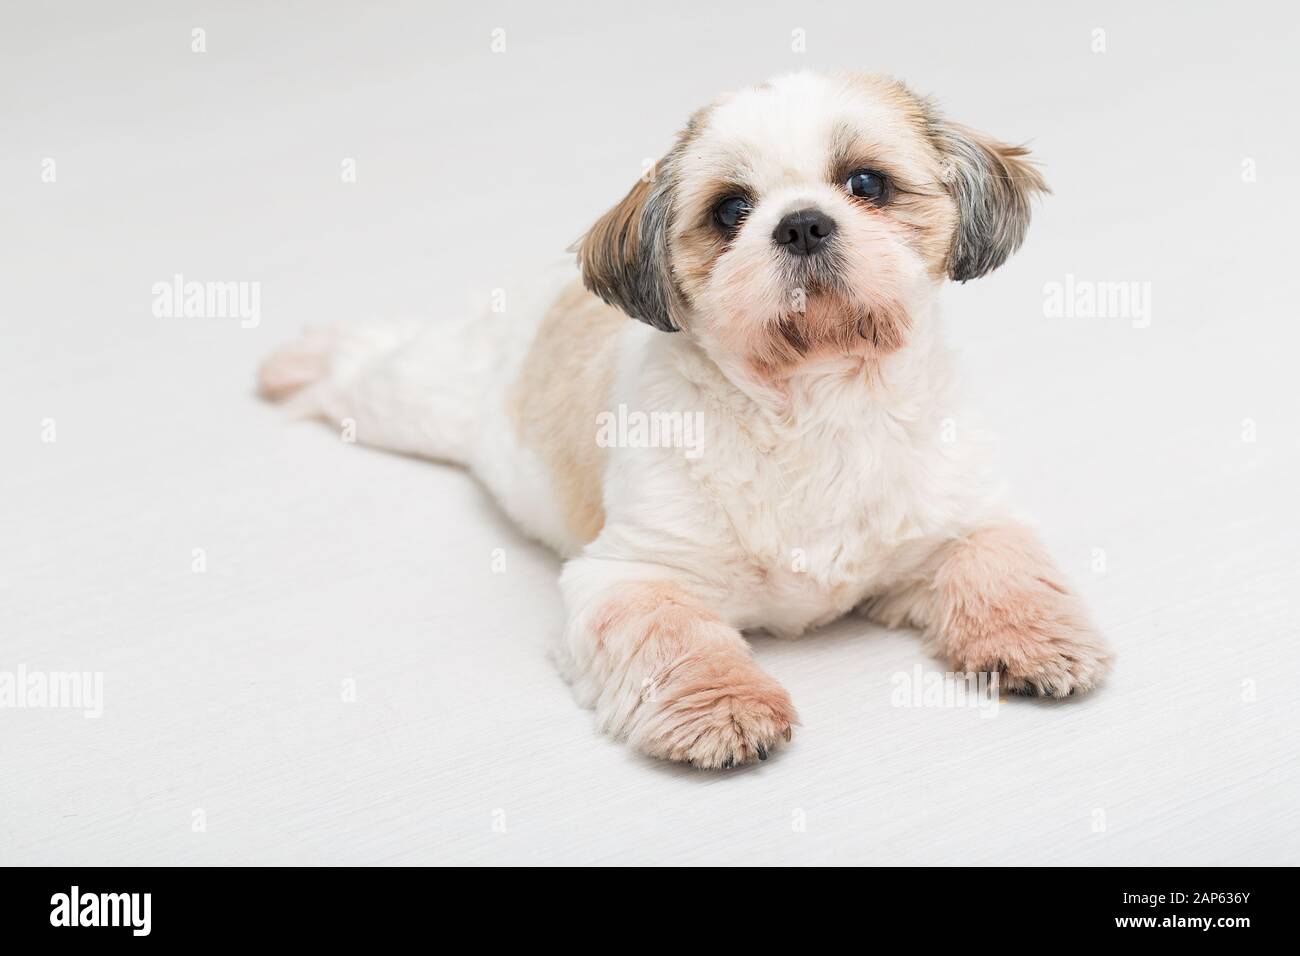 Shih tzu puppy posing on white background. Studio portrait of the dog. Stock Photo